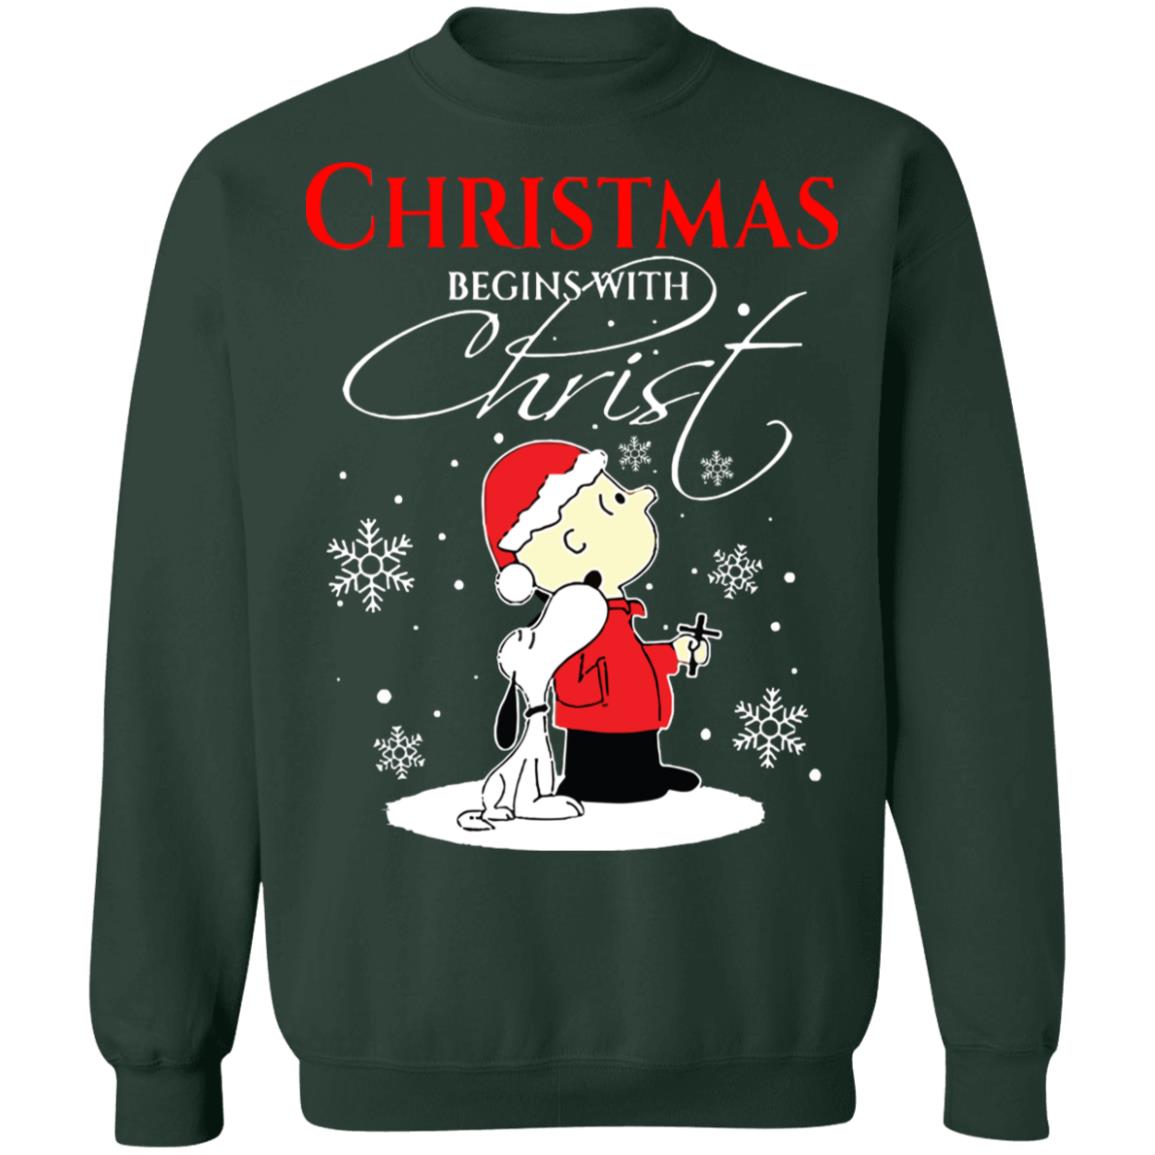 Christmas begins with Christ Charlie Brown Snoopy sweatshirt